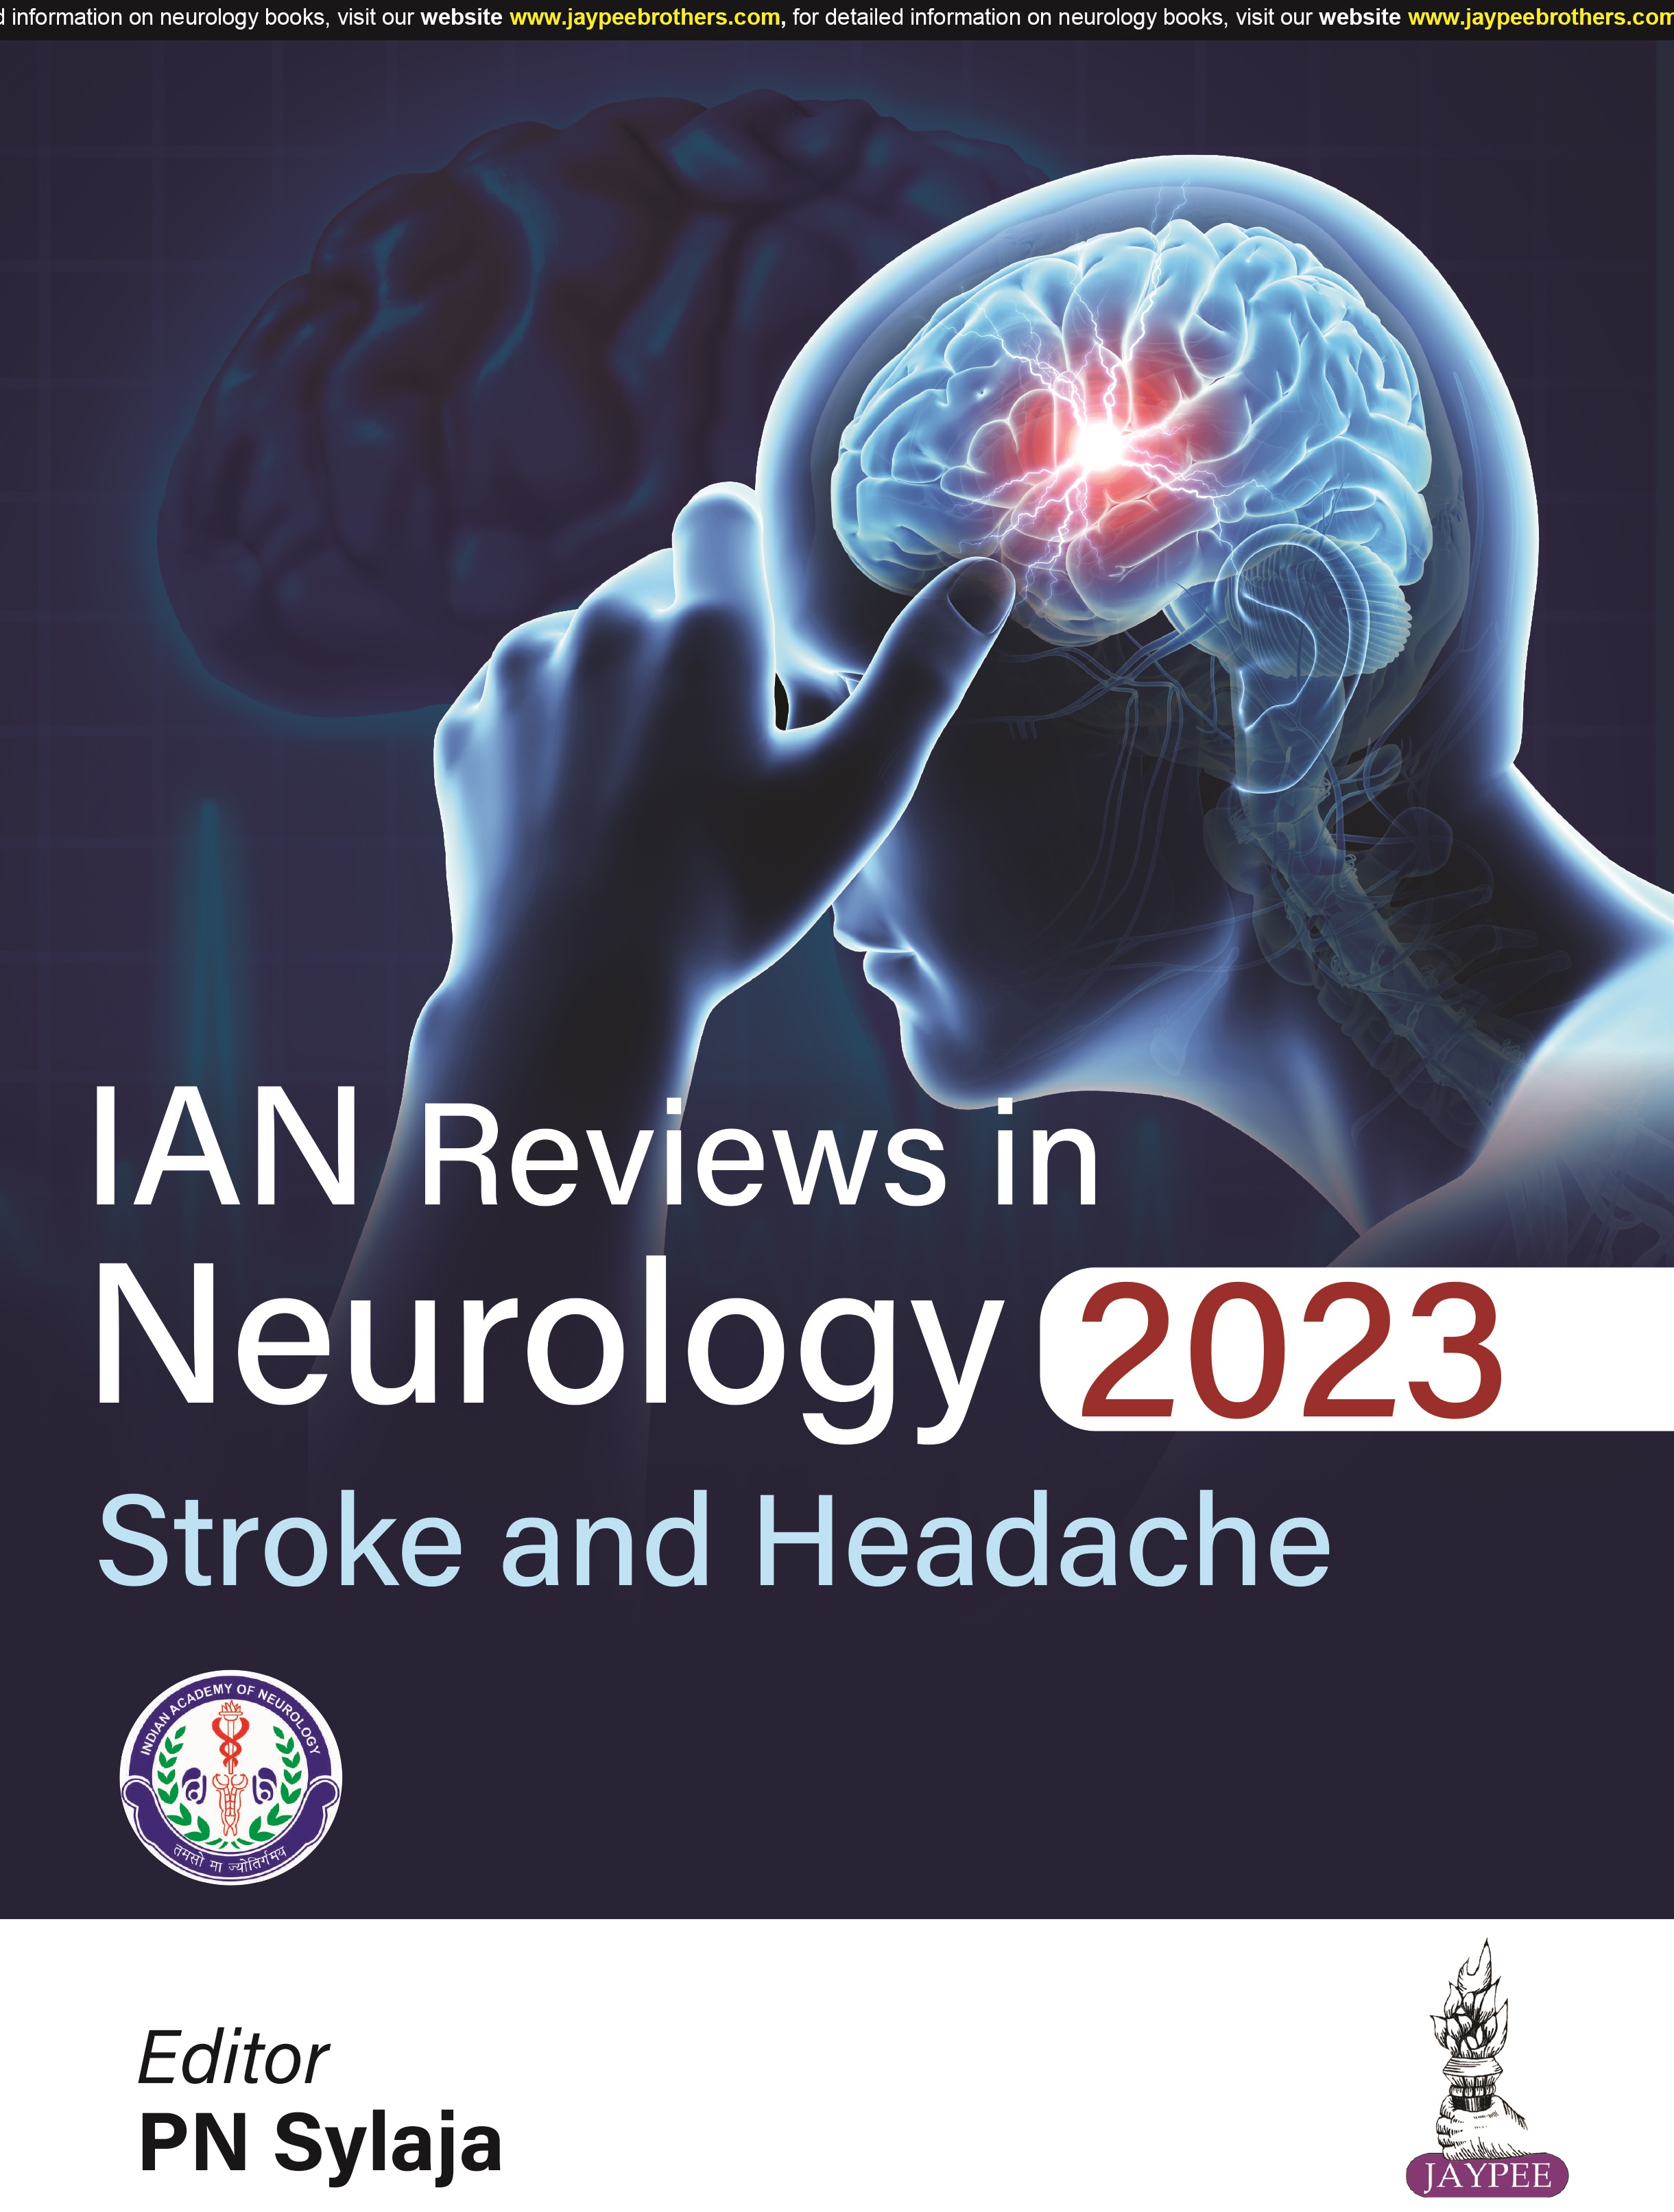 IAN Reviews in Neurology 2023: Stroke and Headache